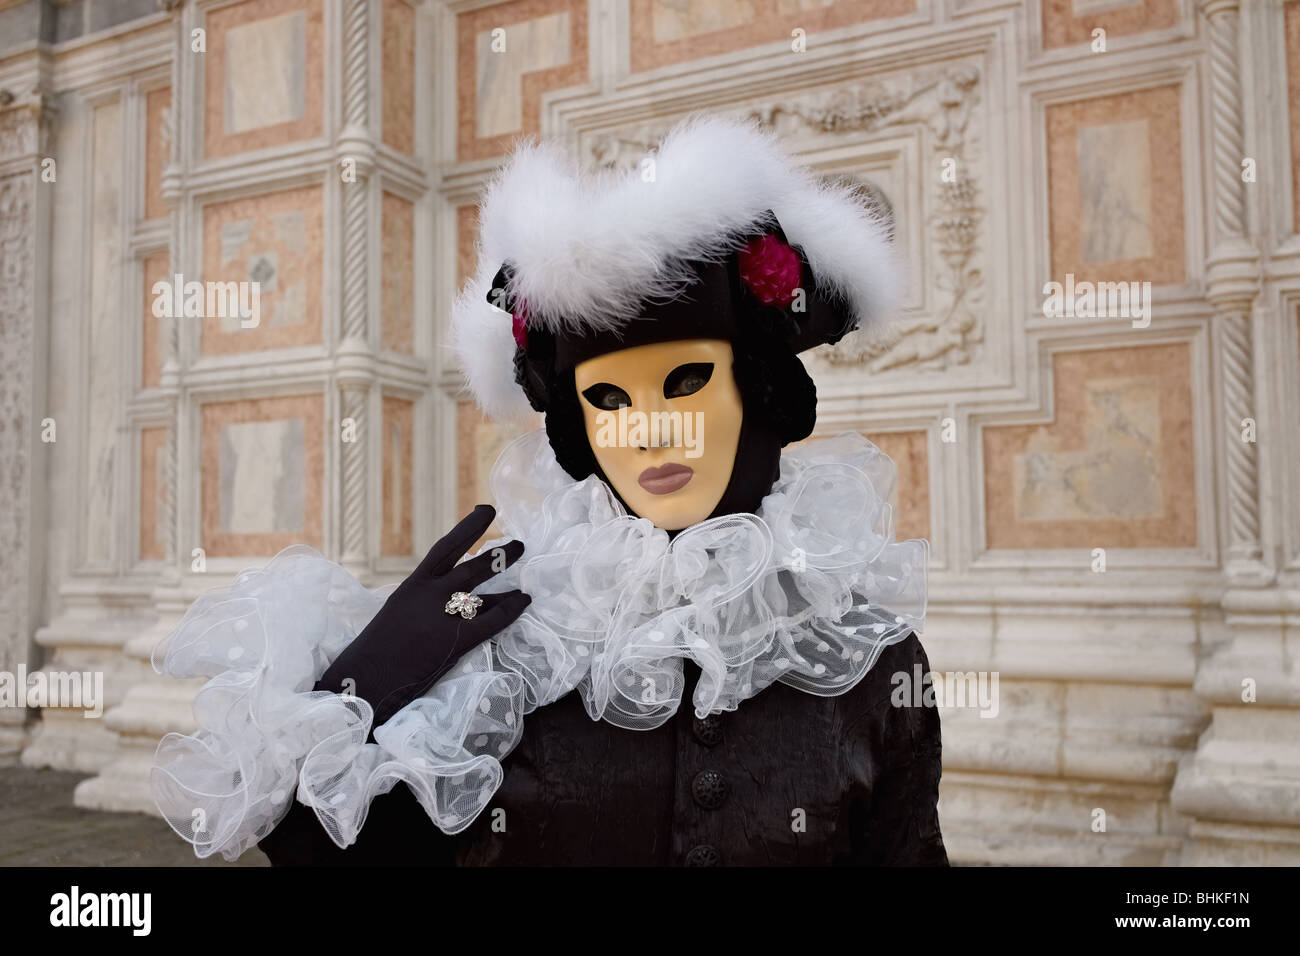 Woman in full decorative carnival costume in Venice. Stock Photo